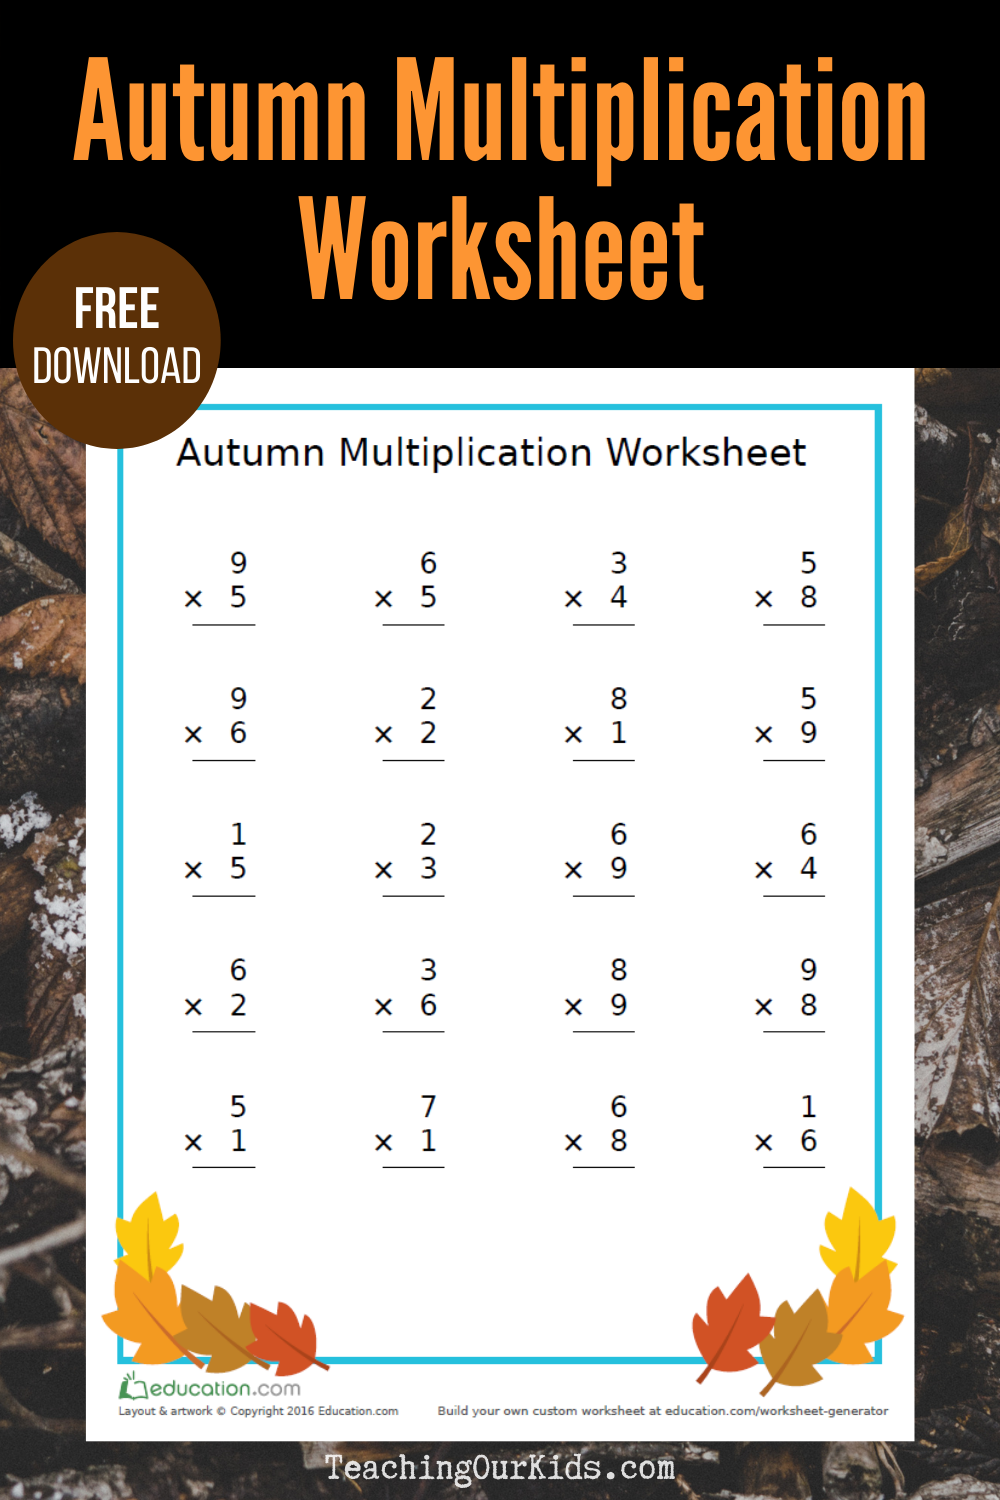 freebie-autumn-multiplication-worksheet-educational-freebies